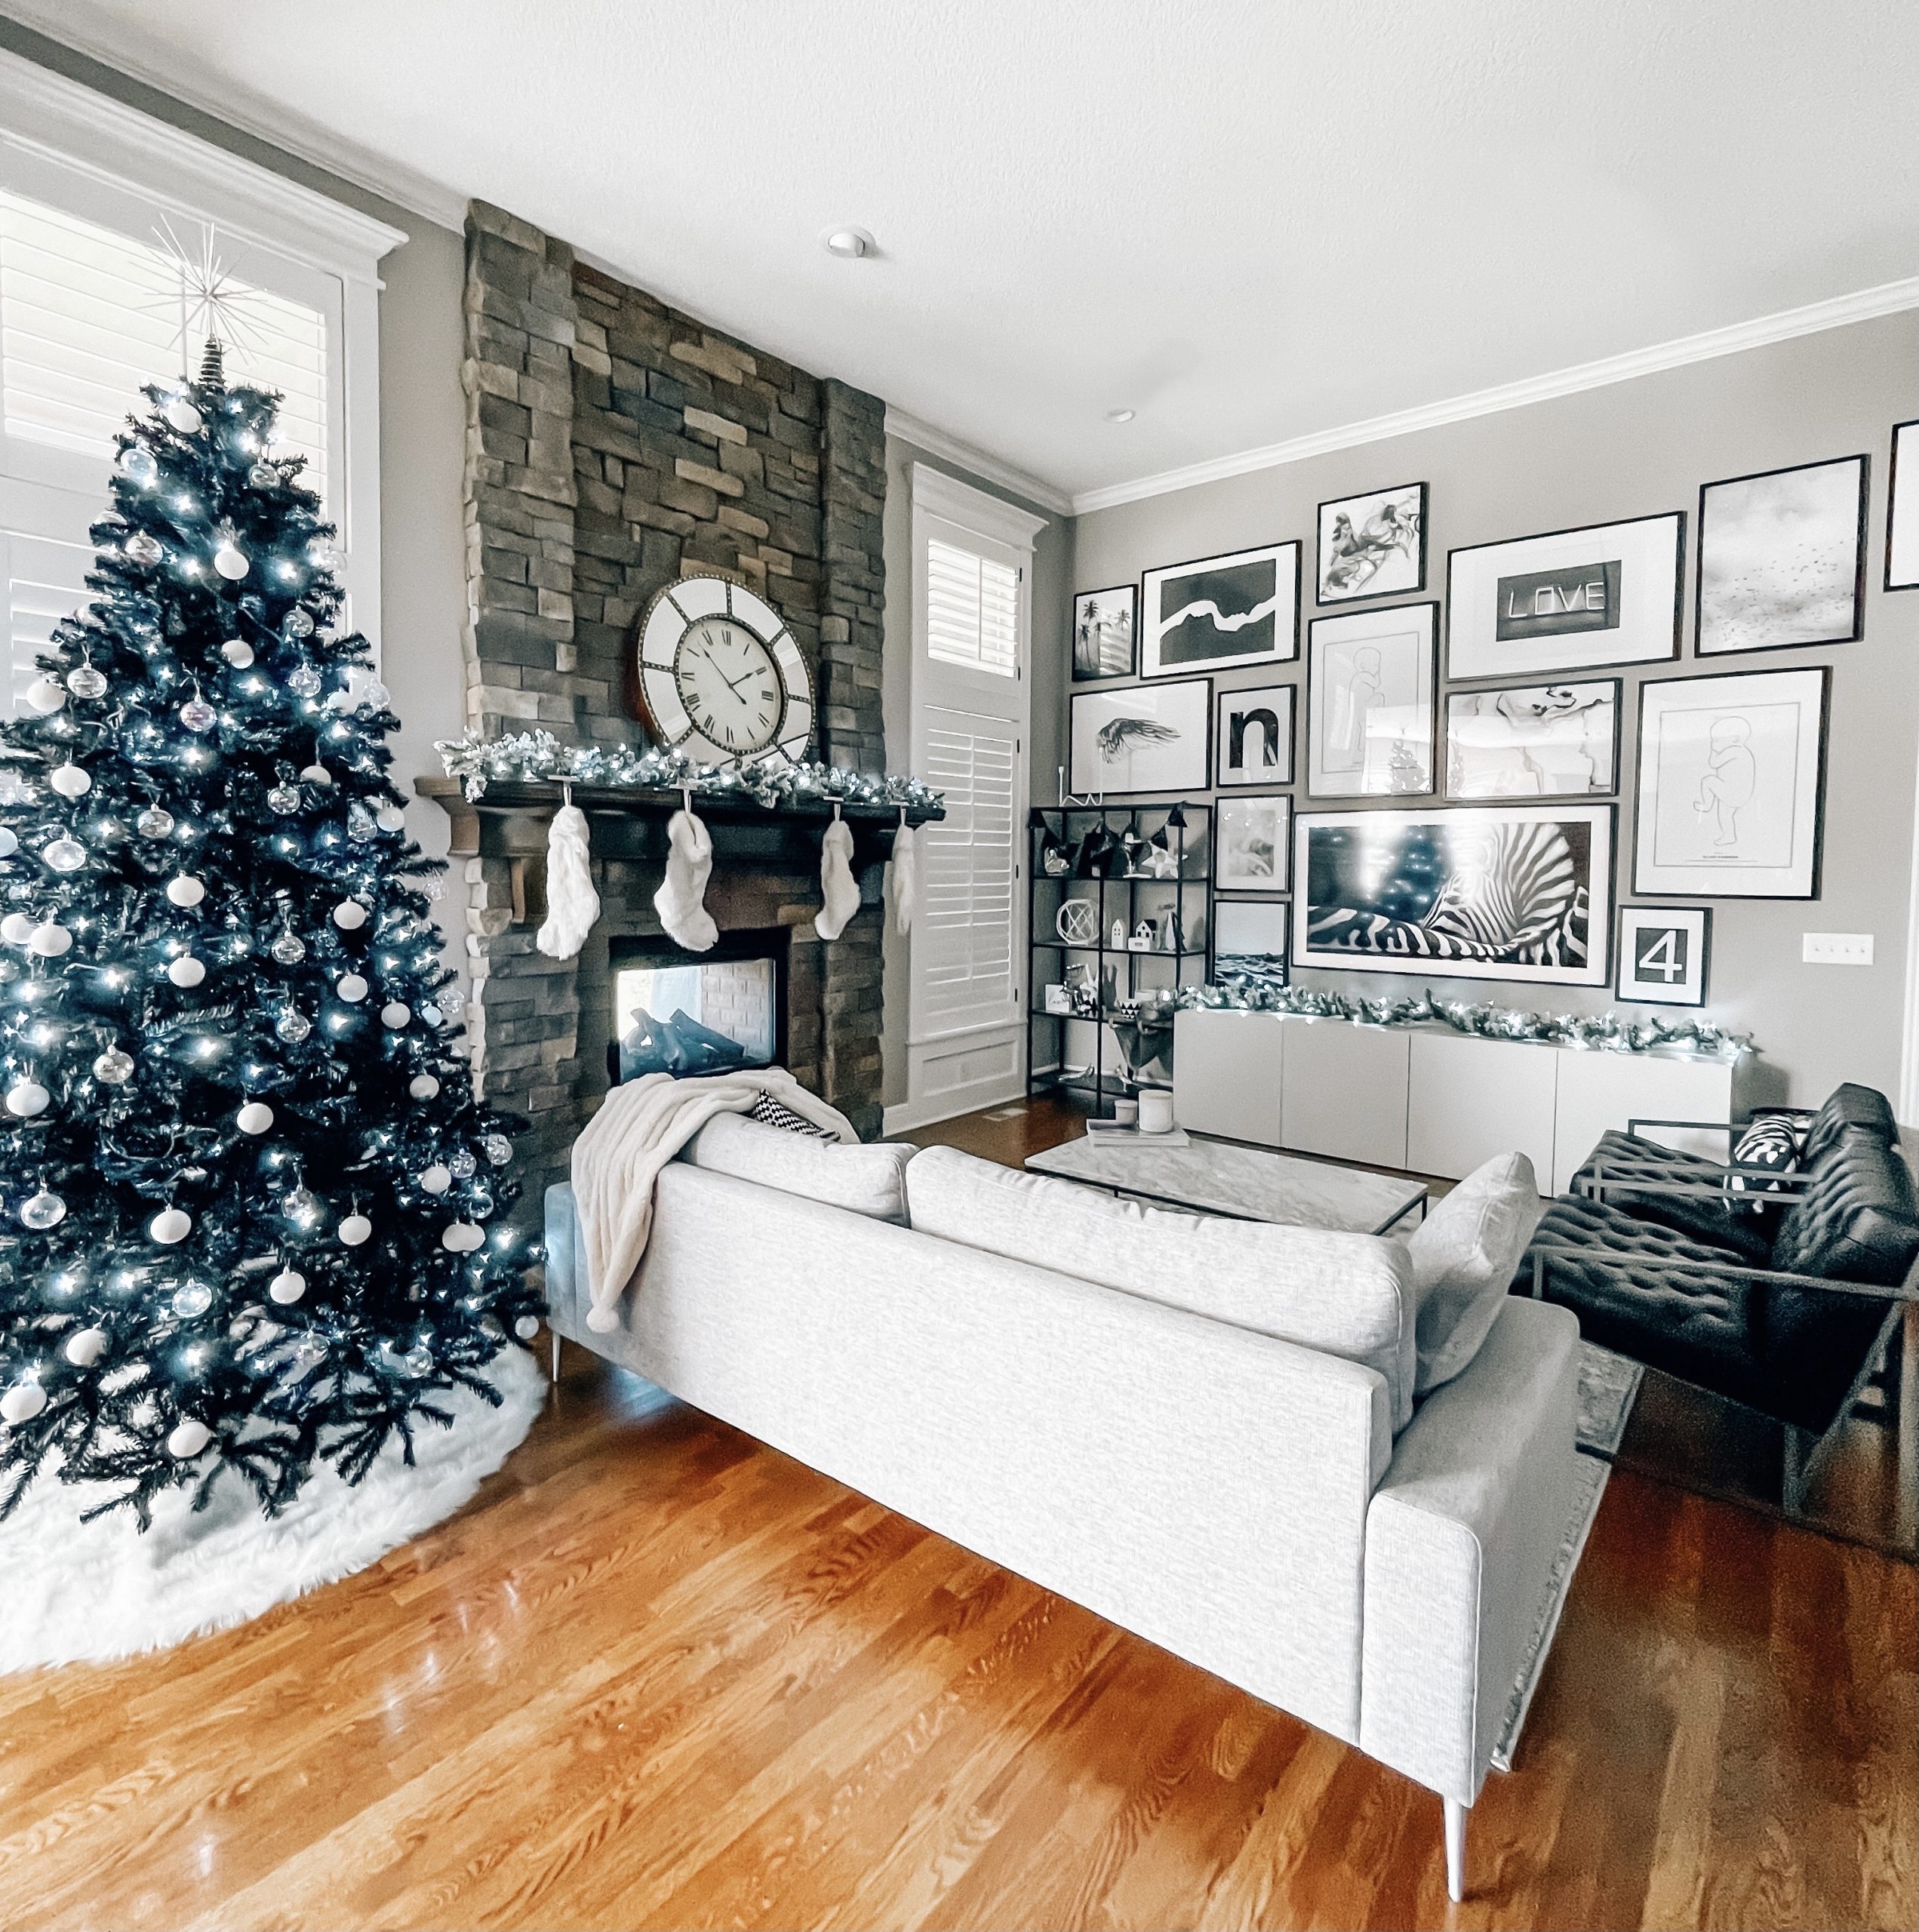 Modern Living Room Christmas Decor - Blogger Tricia Nibarger shares living room Christmas decor in her modern home, featuring a black Christmas tree and a monochrome Christmas theme! #modern #christmasdecor #blackchristmastree 